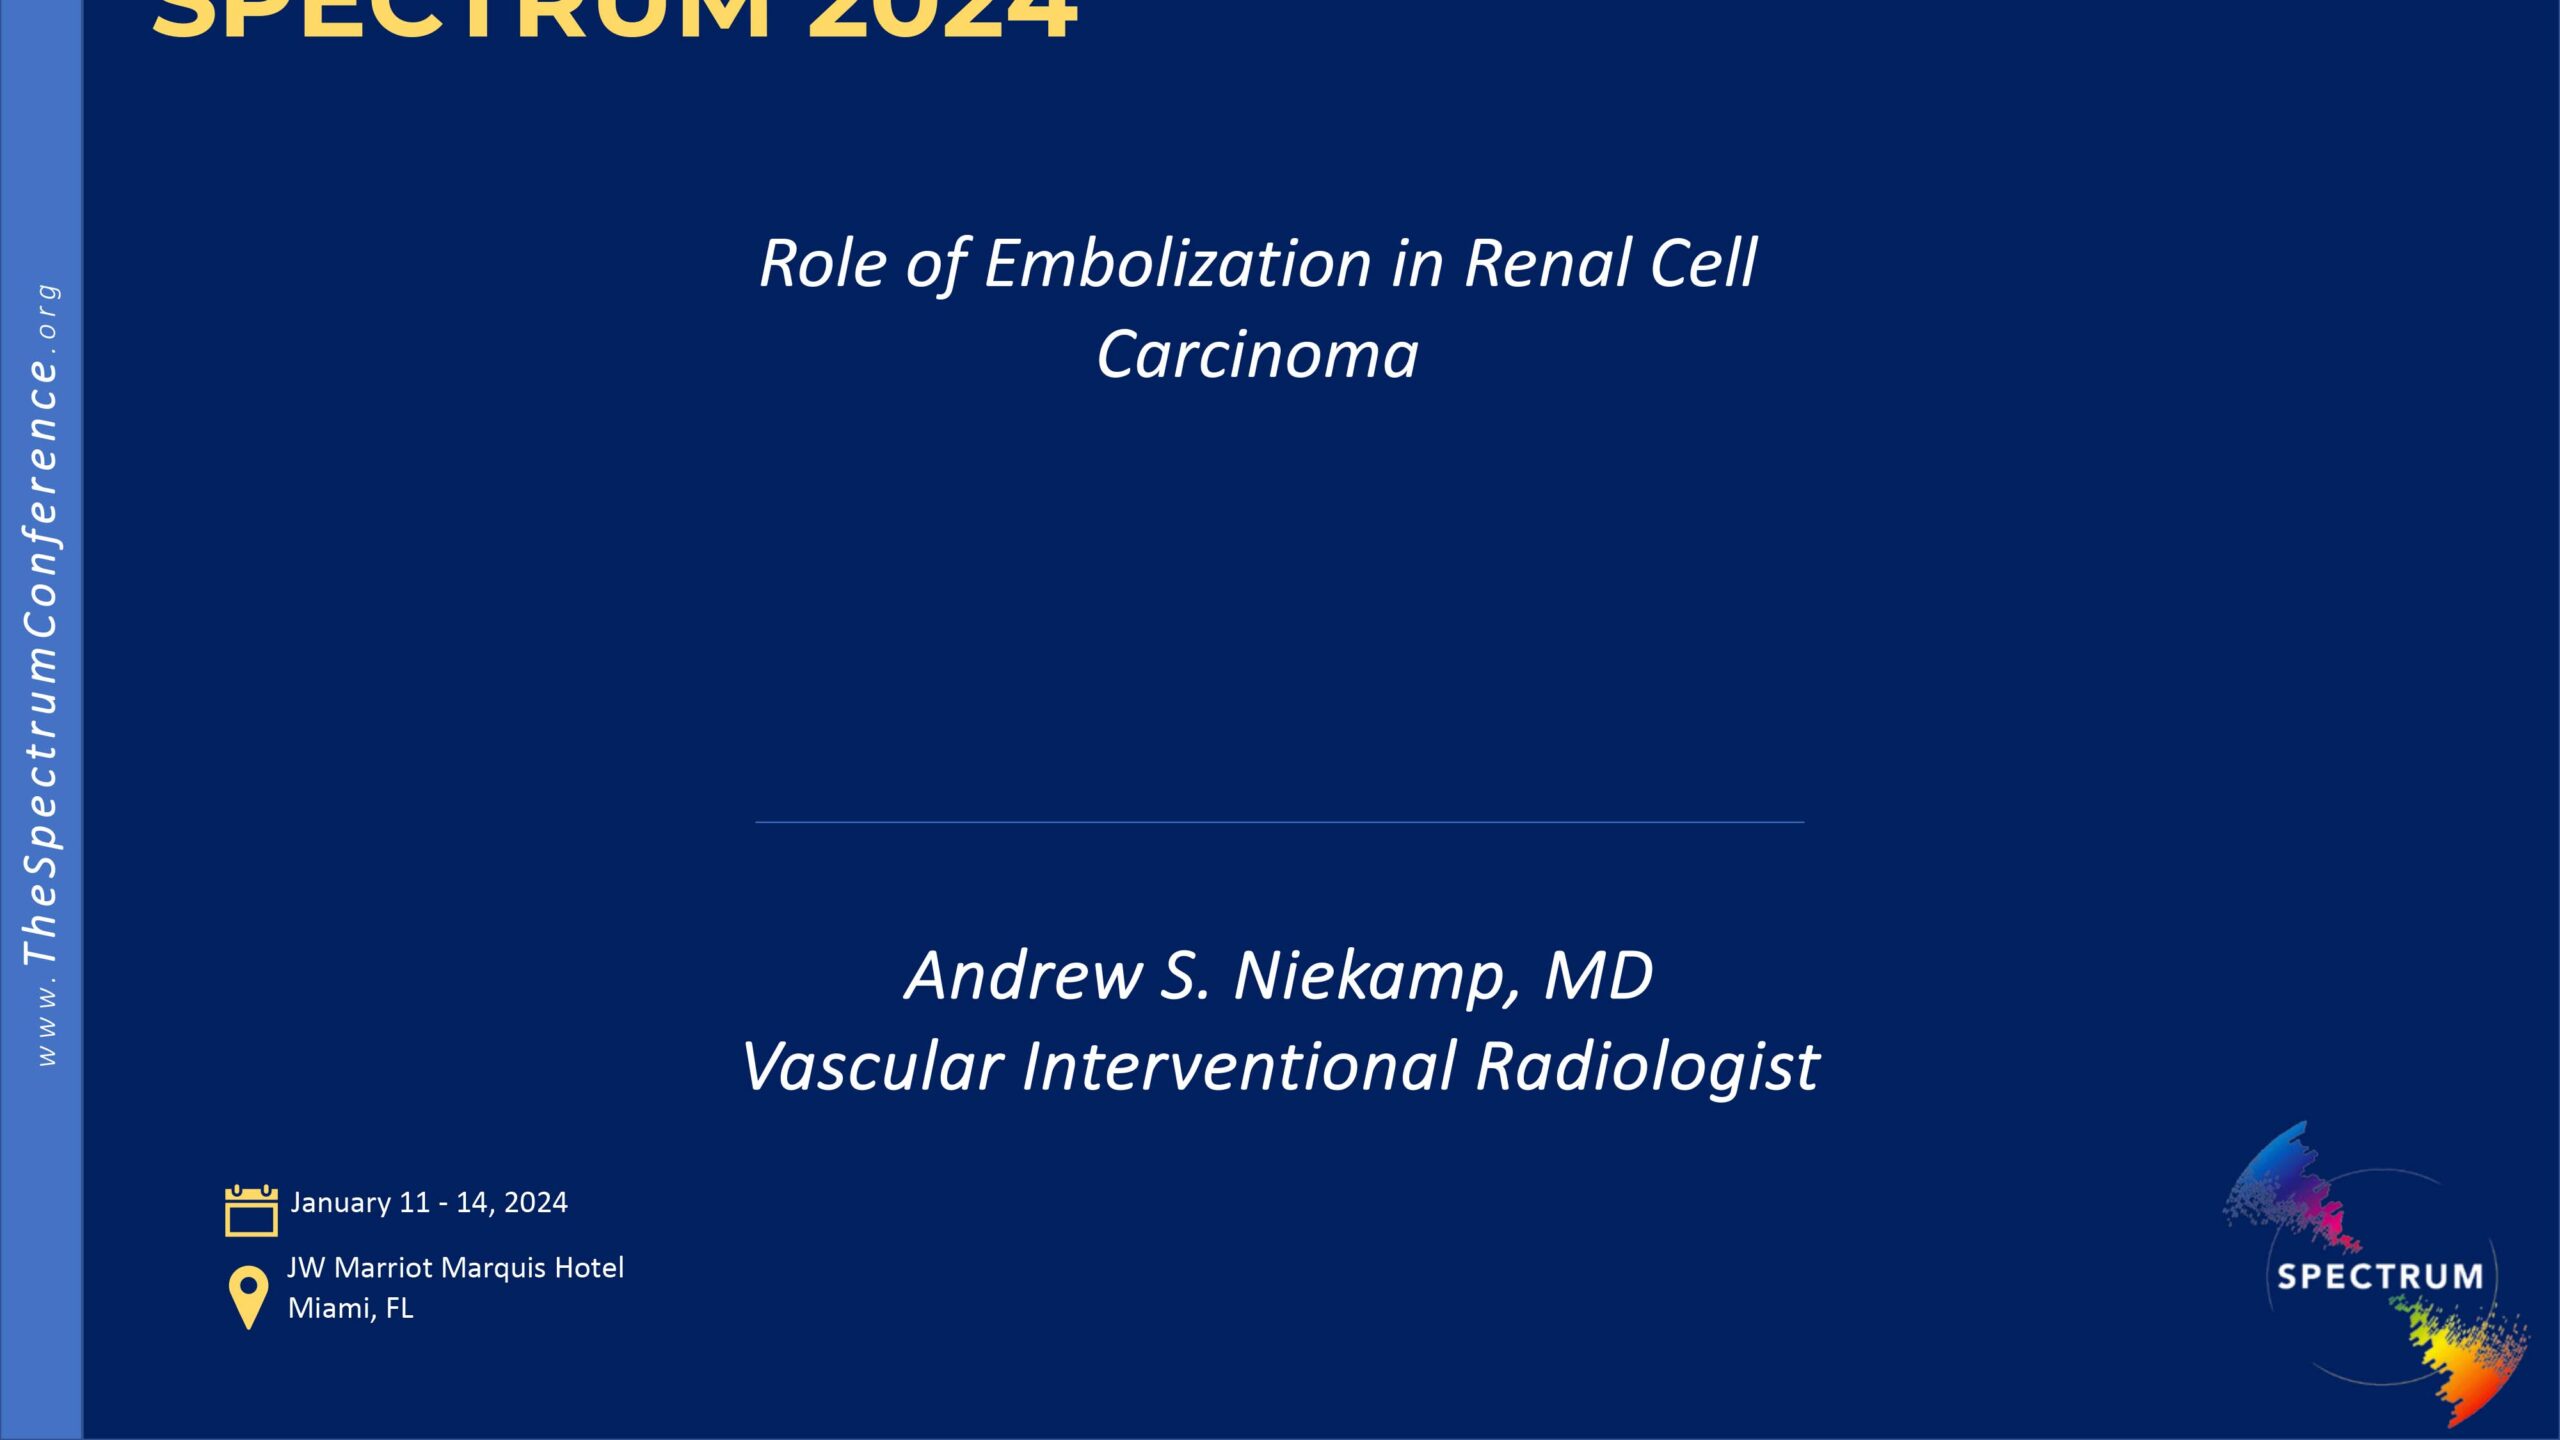 Role of Embolization in RCC